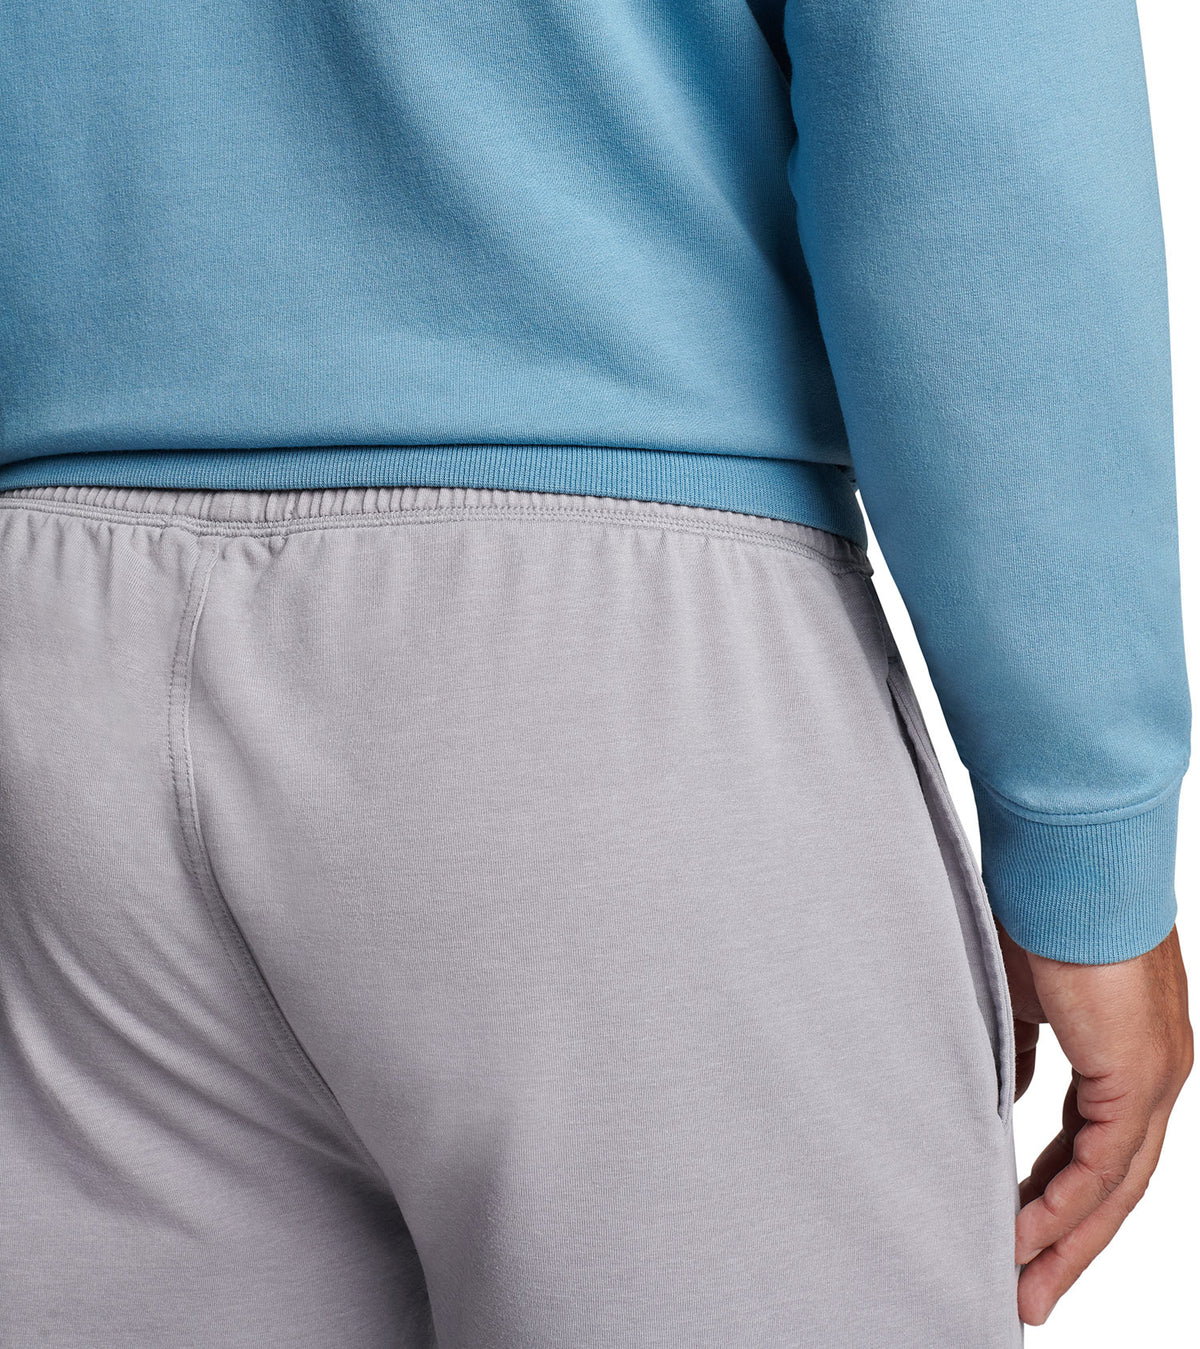 Peter Millar Lava Wash Pull-On Shorts, Men's Big & Tall